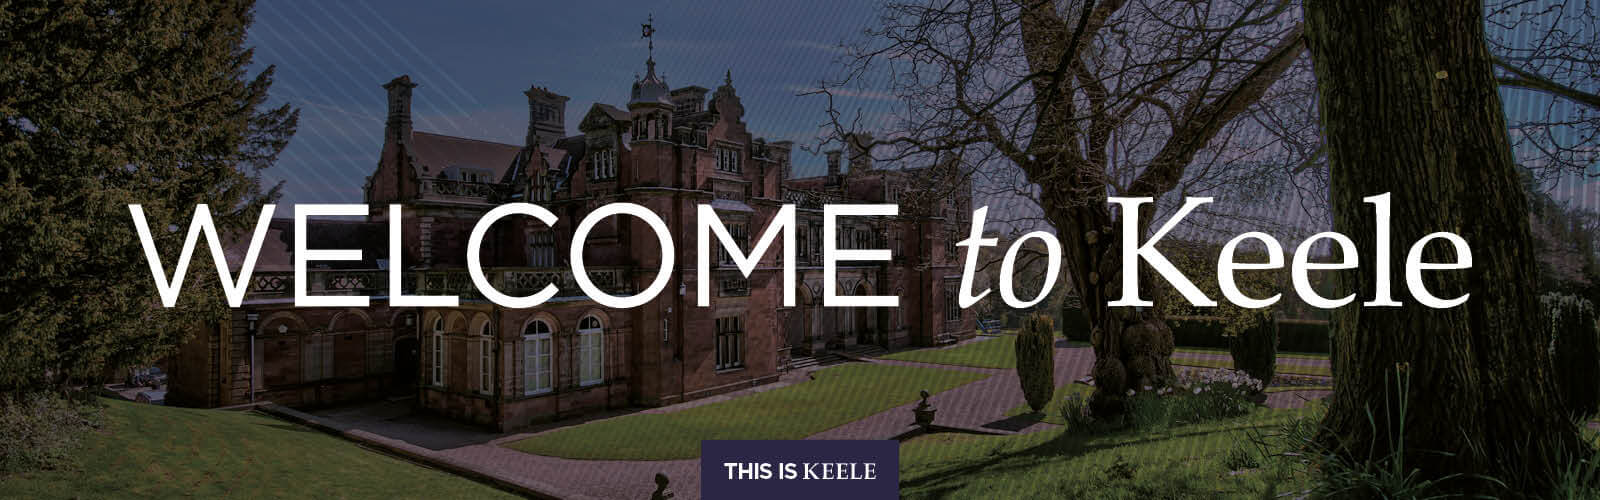 Welcome to Keele University